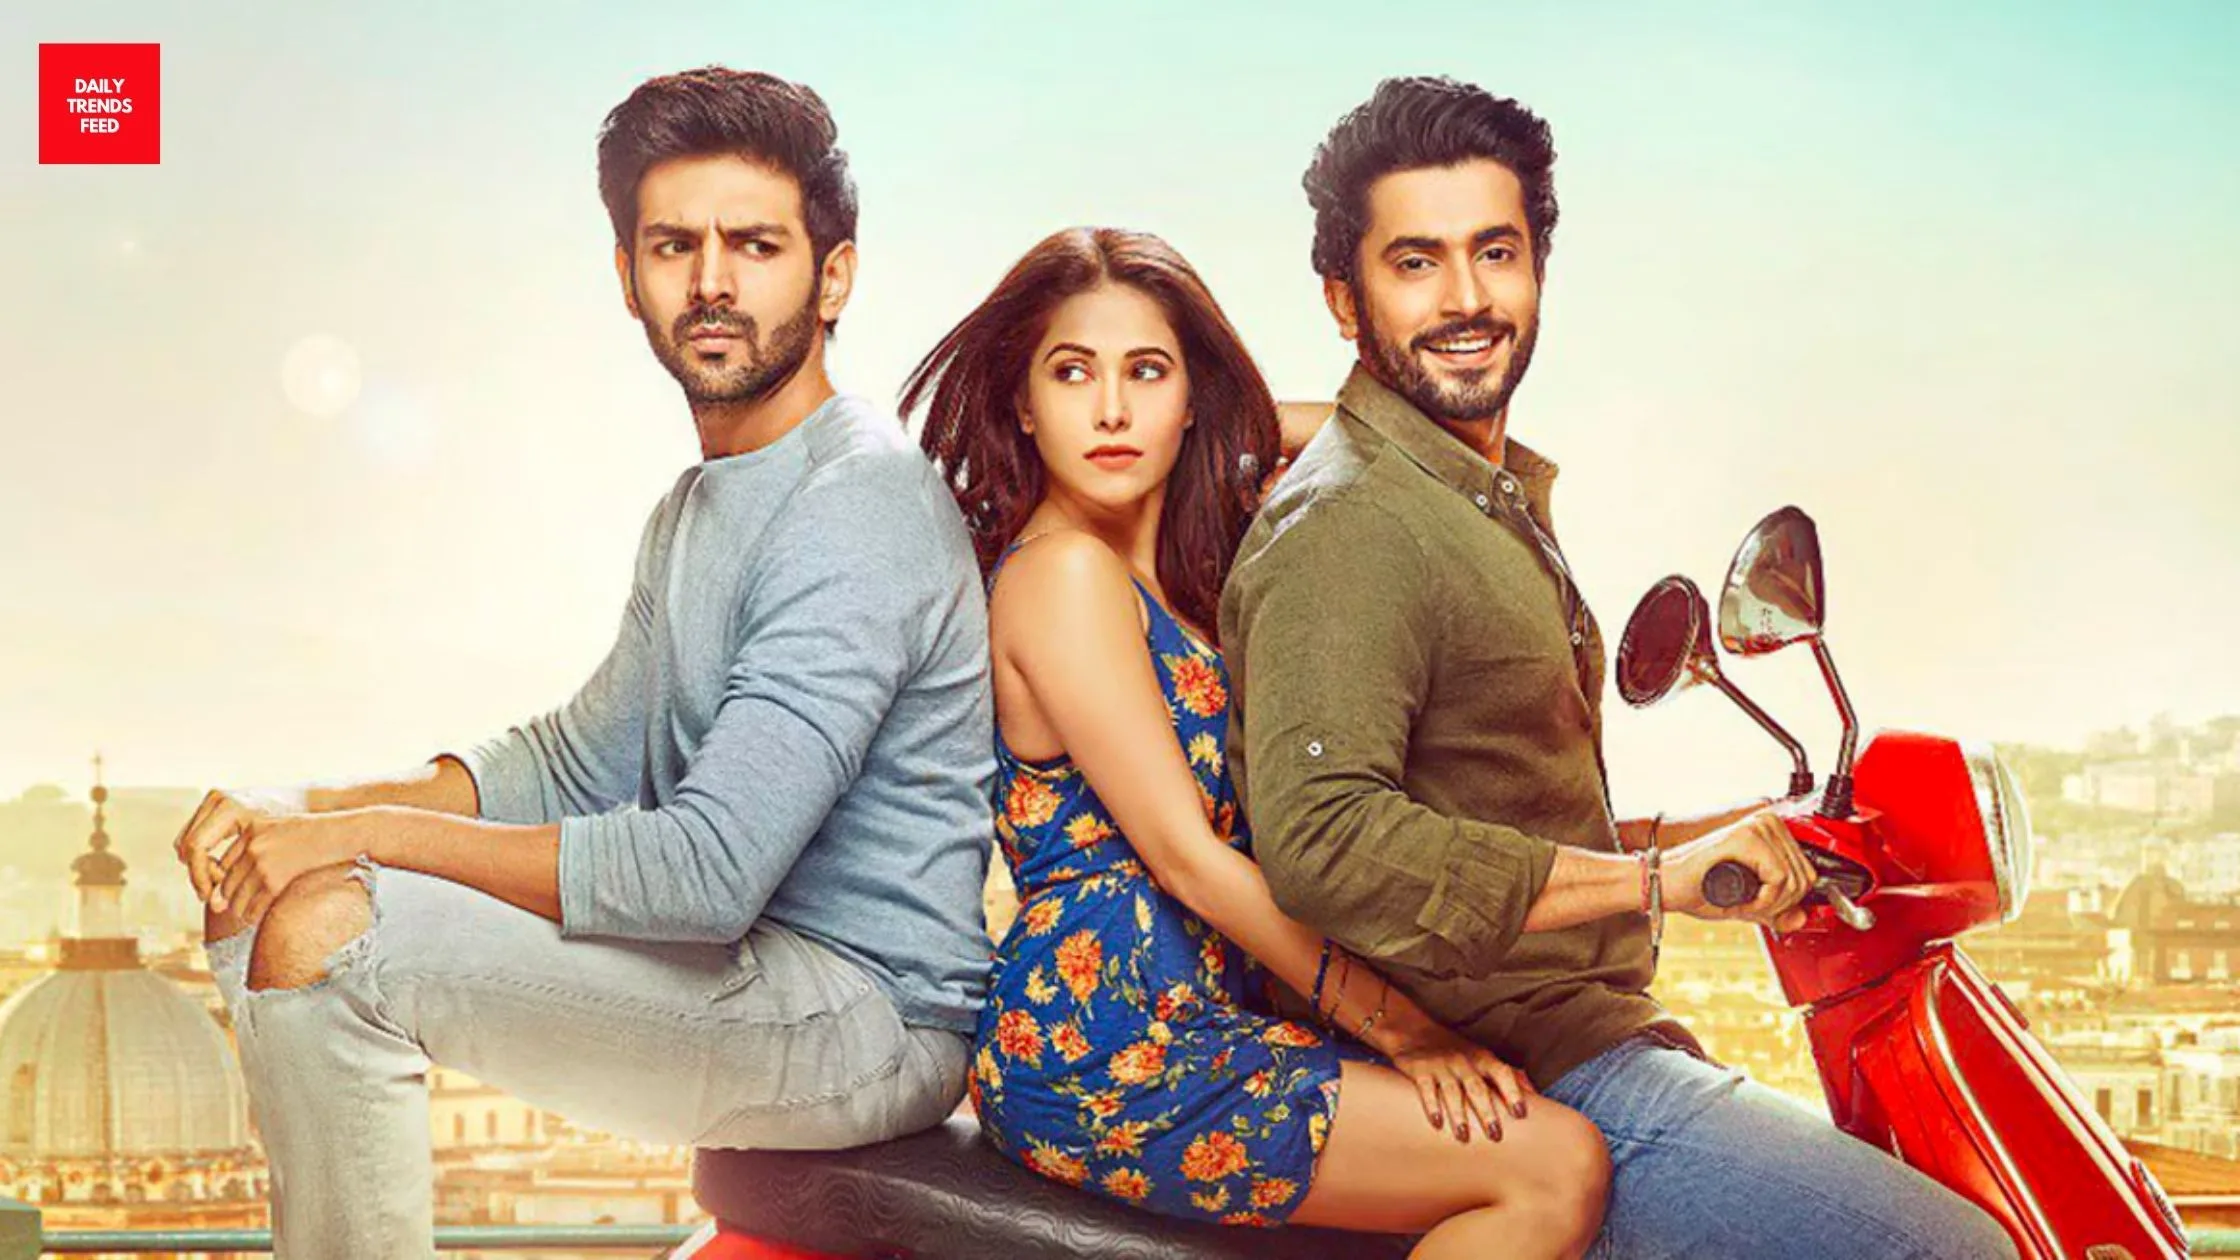 Comedy Hindi Movies On Amazon Prime: Sonu Ke Titu Ki Sweety